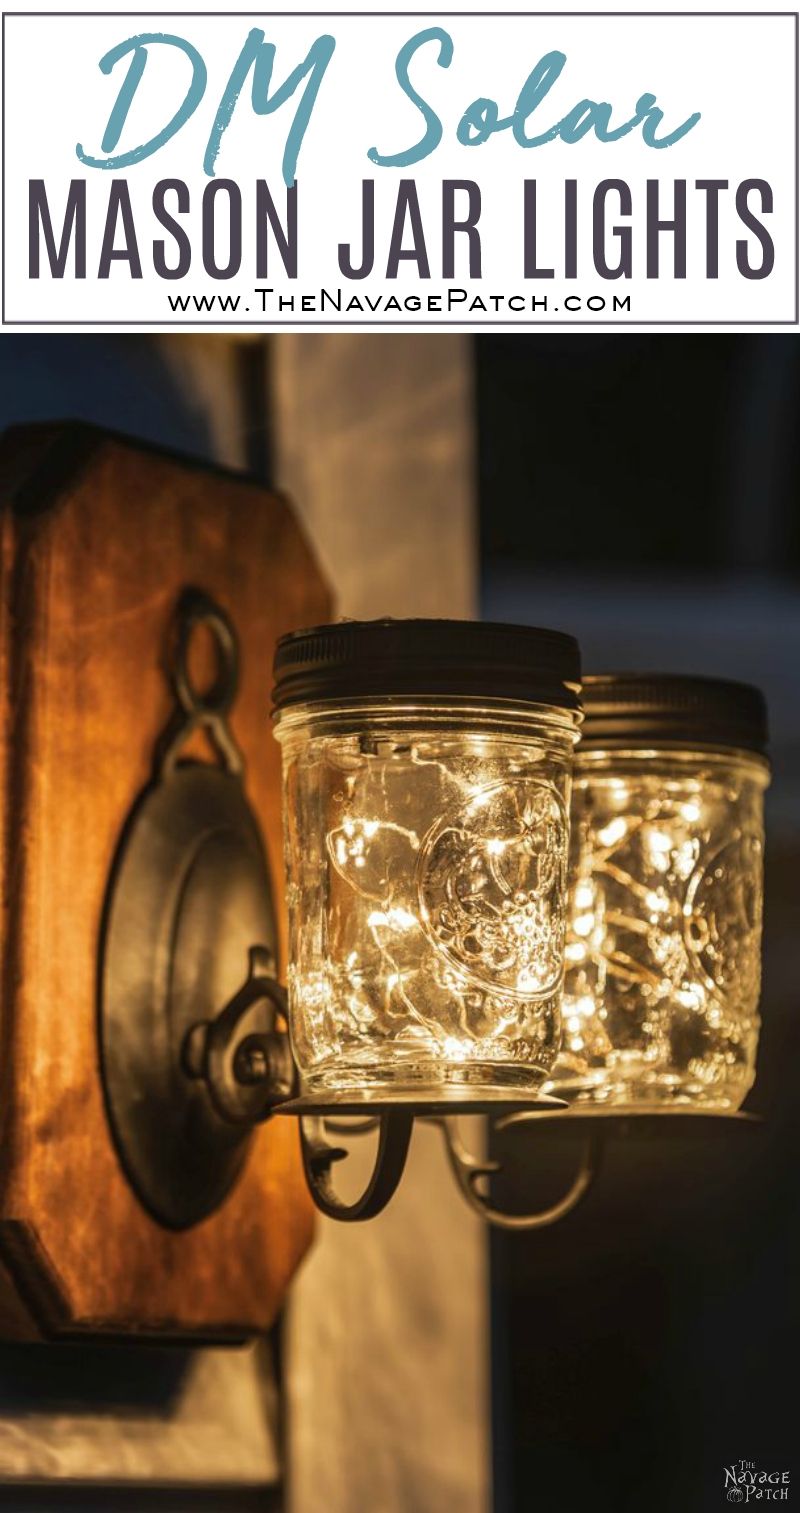 Solar Mason Jar Lights | DIY outdoor solar lights | Upcycled mason jar solar lights | How to drill glass easily | How to easily drill ceramic | DIY outdoor solar sconces from mason jars | DIY outdoor sconces | DIY Porch lighting | Repurposed mason jars | #TheNavagePatch #DIY #SolarLights #MasonJars #easydiy #masonjarlights #Lighting #Upcycled # Repurposed #HowTo #CurbAppeal #Porchdecor #farmhouse #farmhousestyle | TheNavagePatch.com